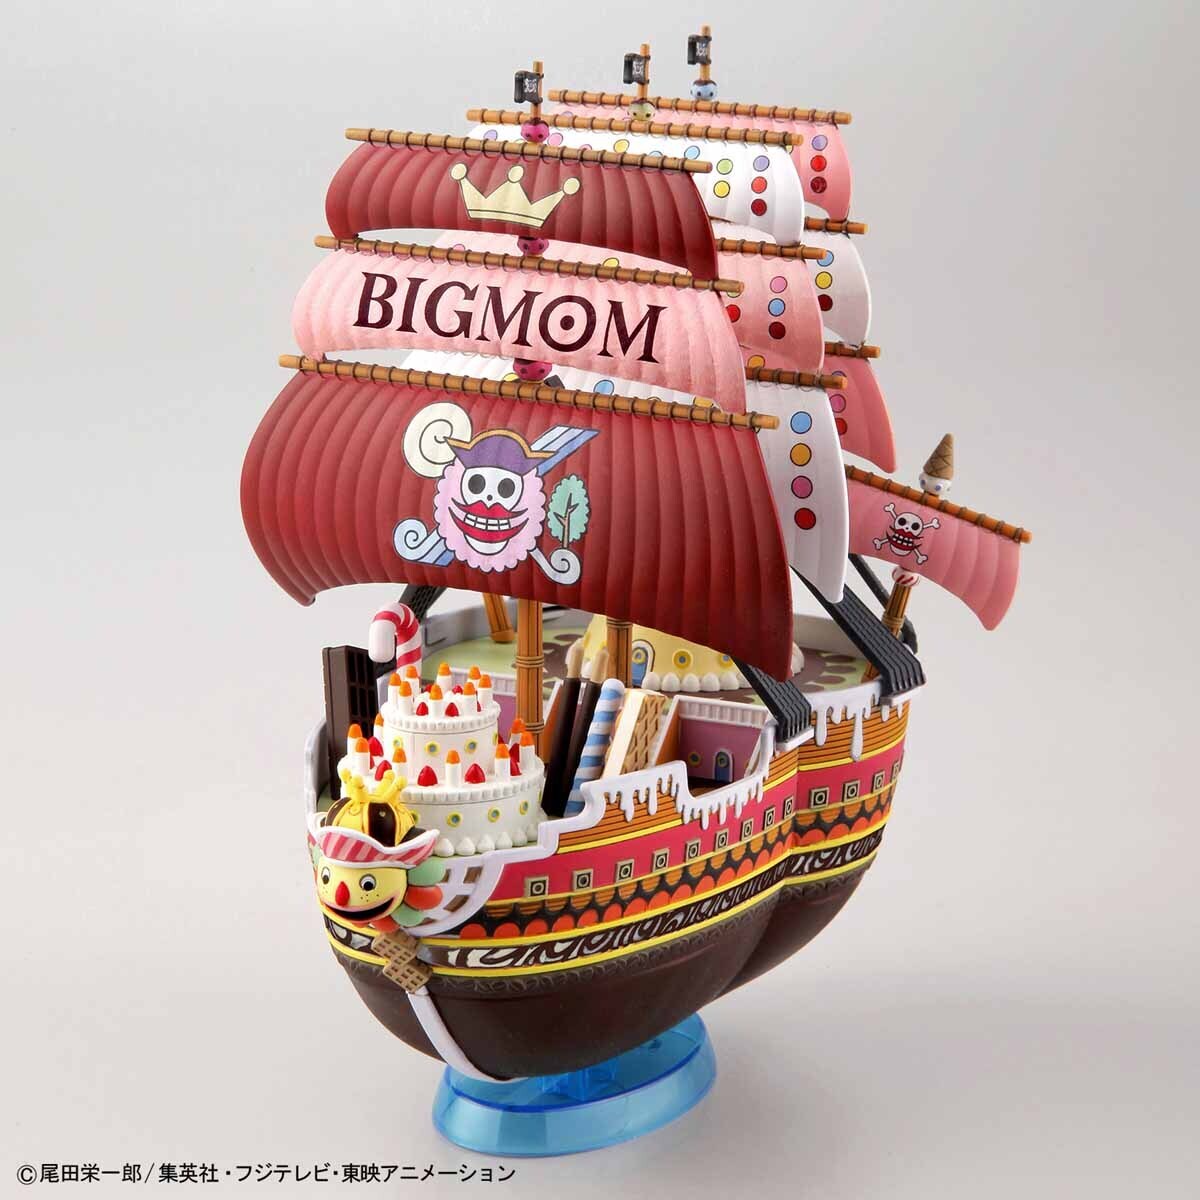 One Piece Grand Ship Collection Queen Mama Chanter